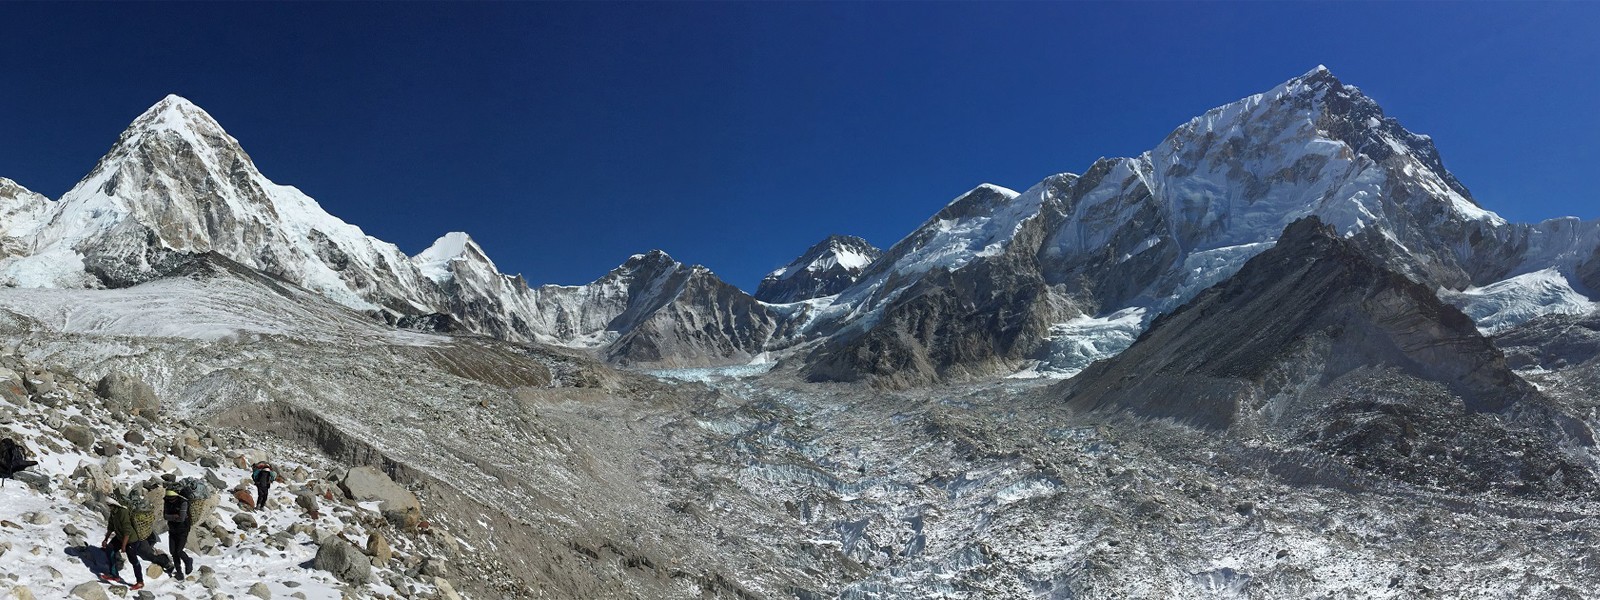 Mt. Nuptse Expedition in Khumbu Region Nepal